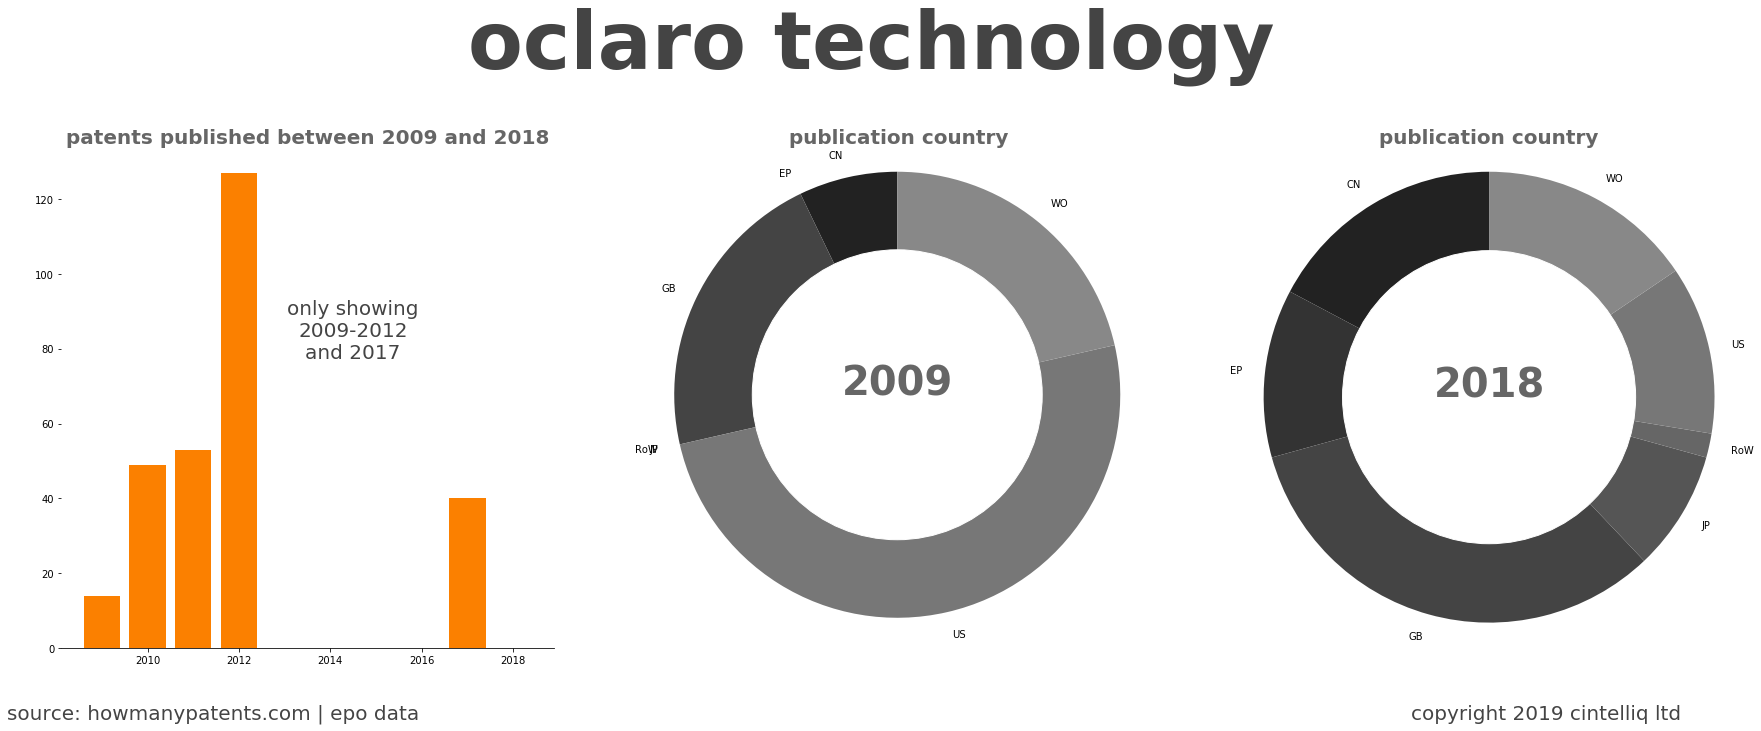 summary of patents for Oclaro Technology